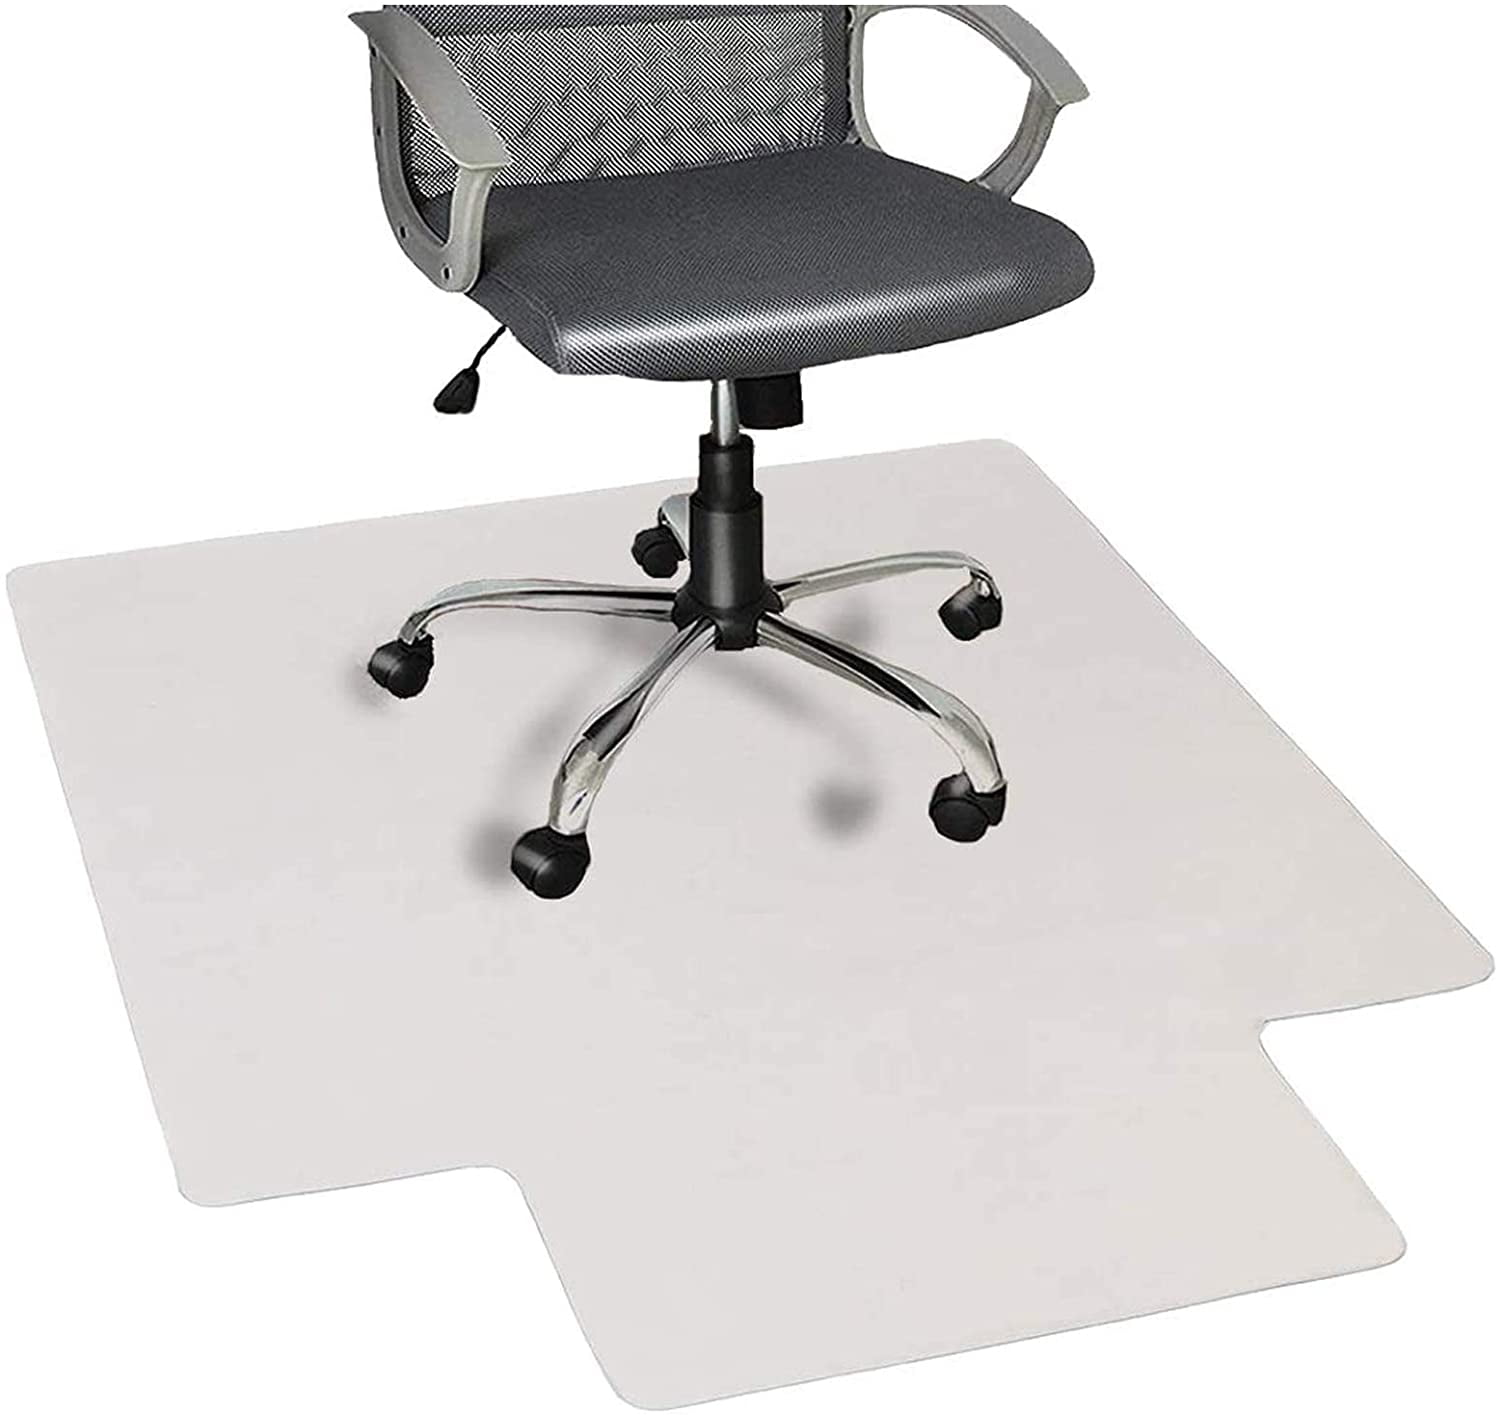 PVC Matte Home-use Office Protective Mat for Floor/Carpet Desk Chair Transparent 